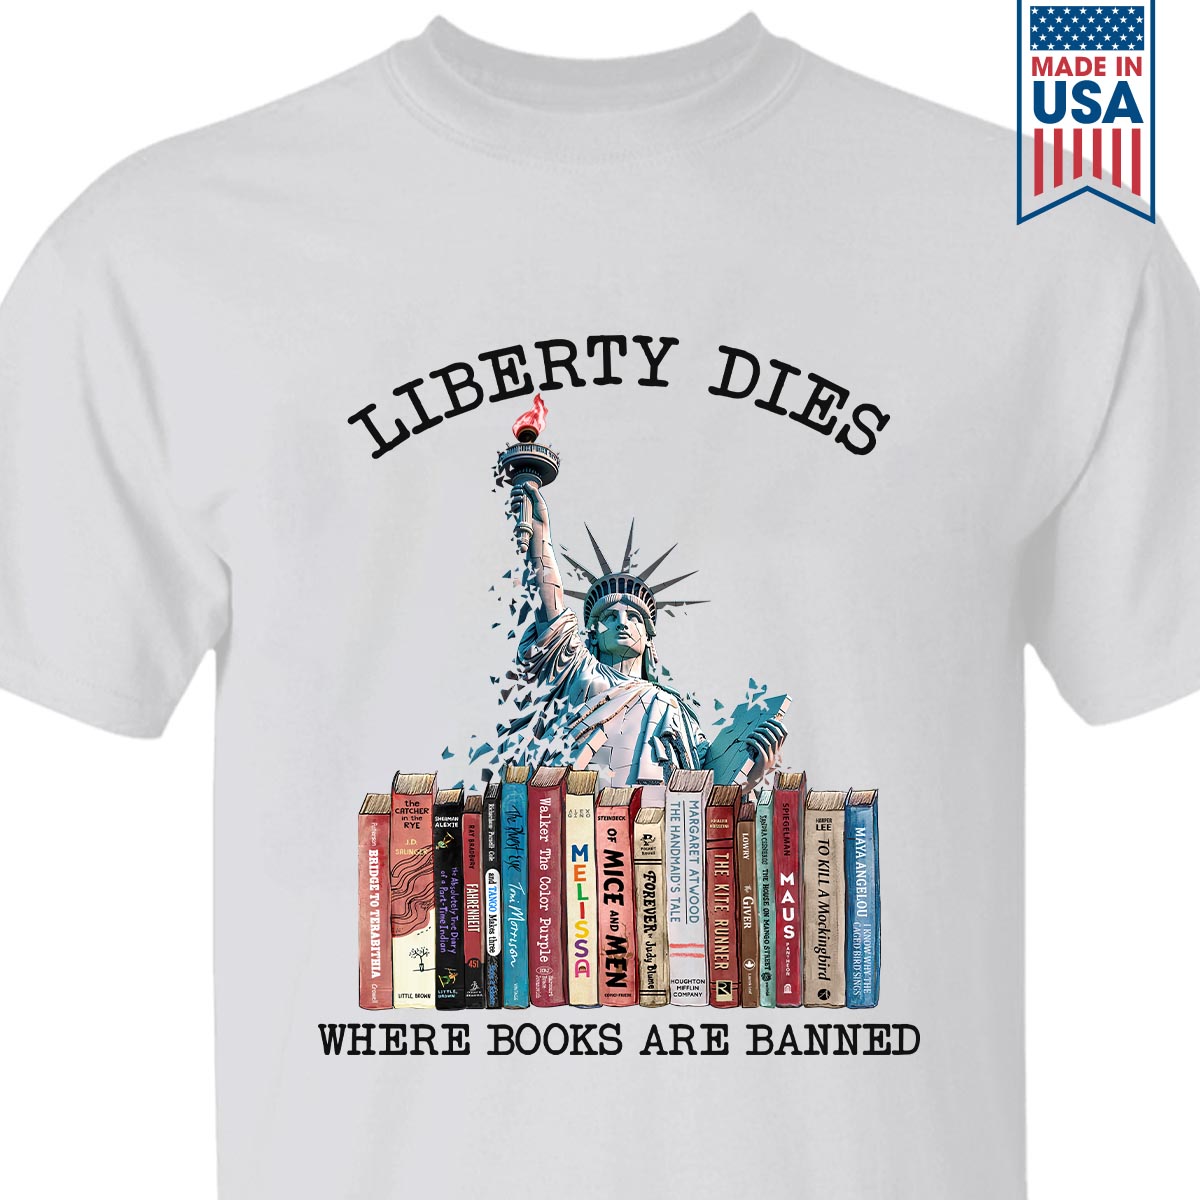 Ladies Liberty Personalised Sweatshirt - Liberty Jumper – Betty